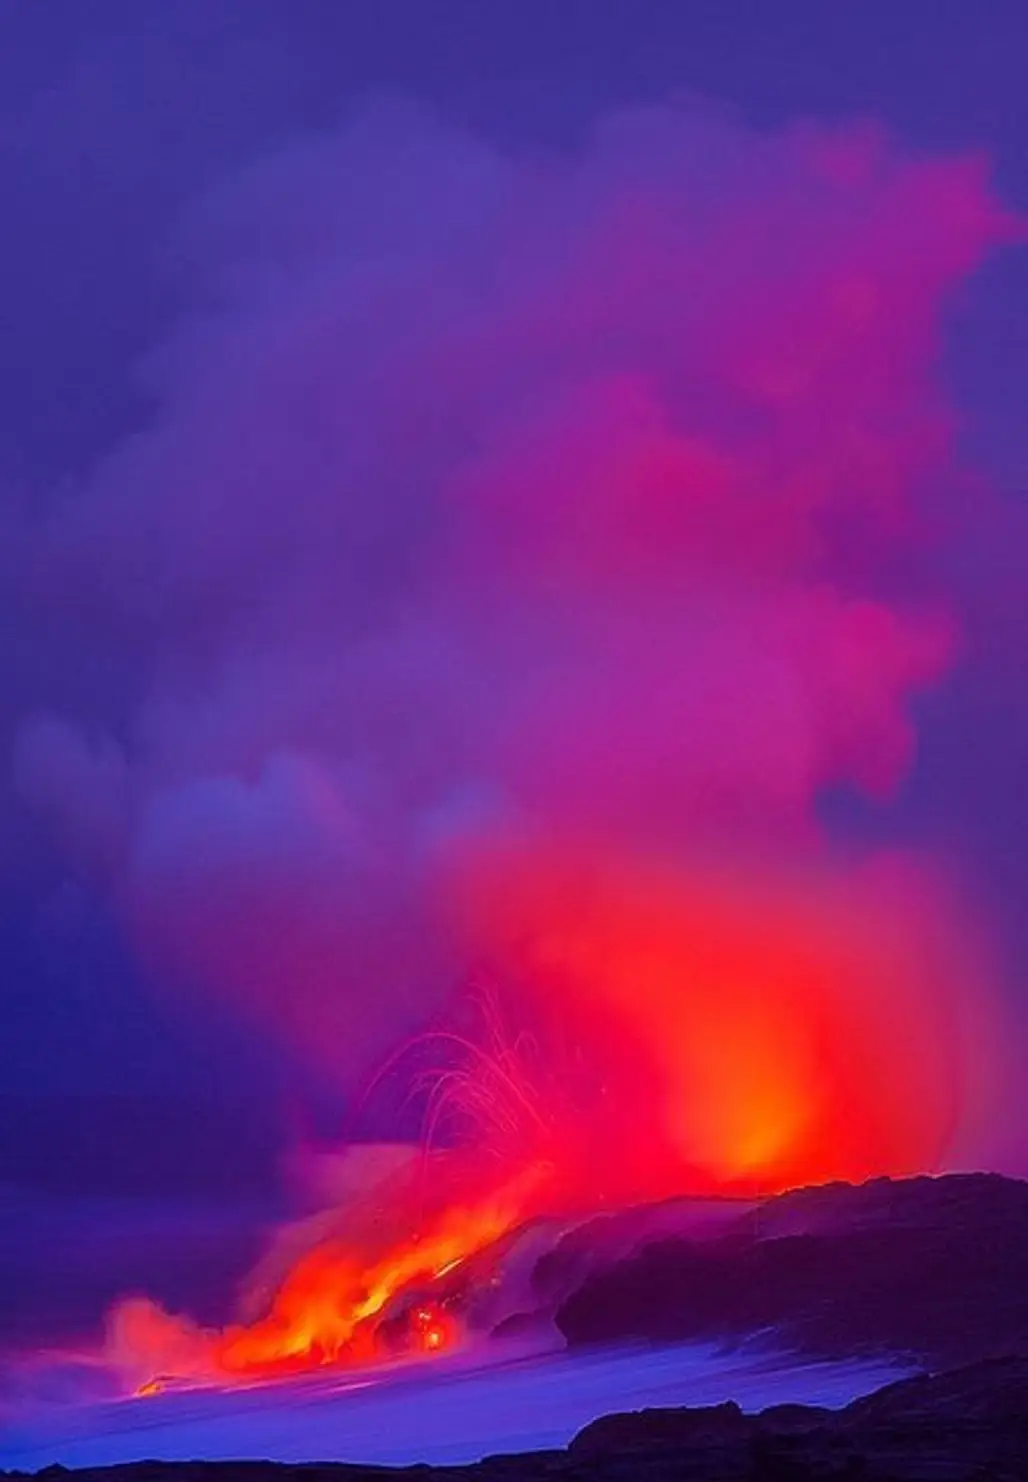 Mount Kilauea, Hawaii Volcanoes National Park